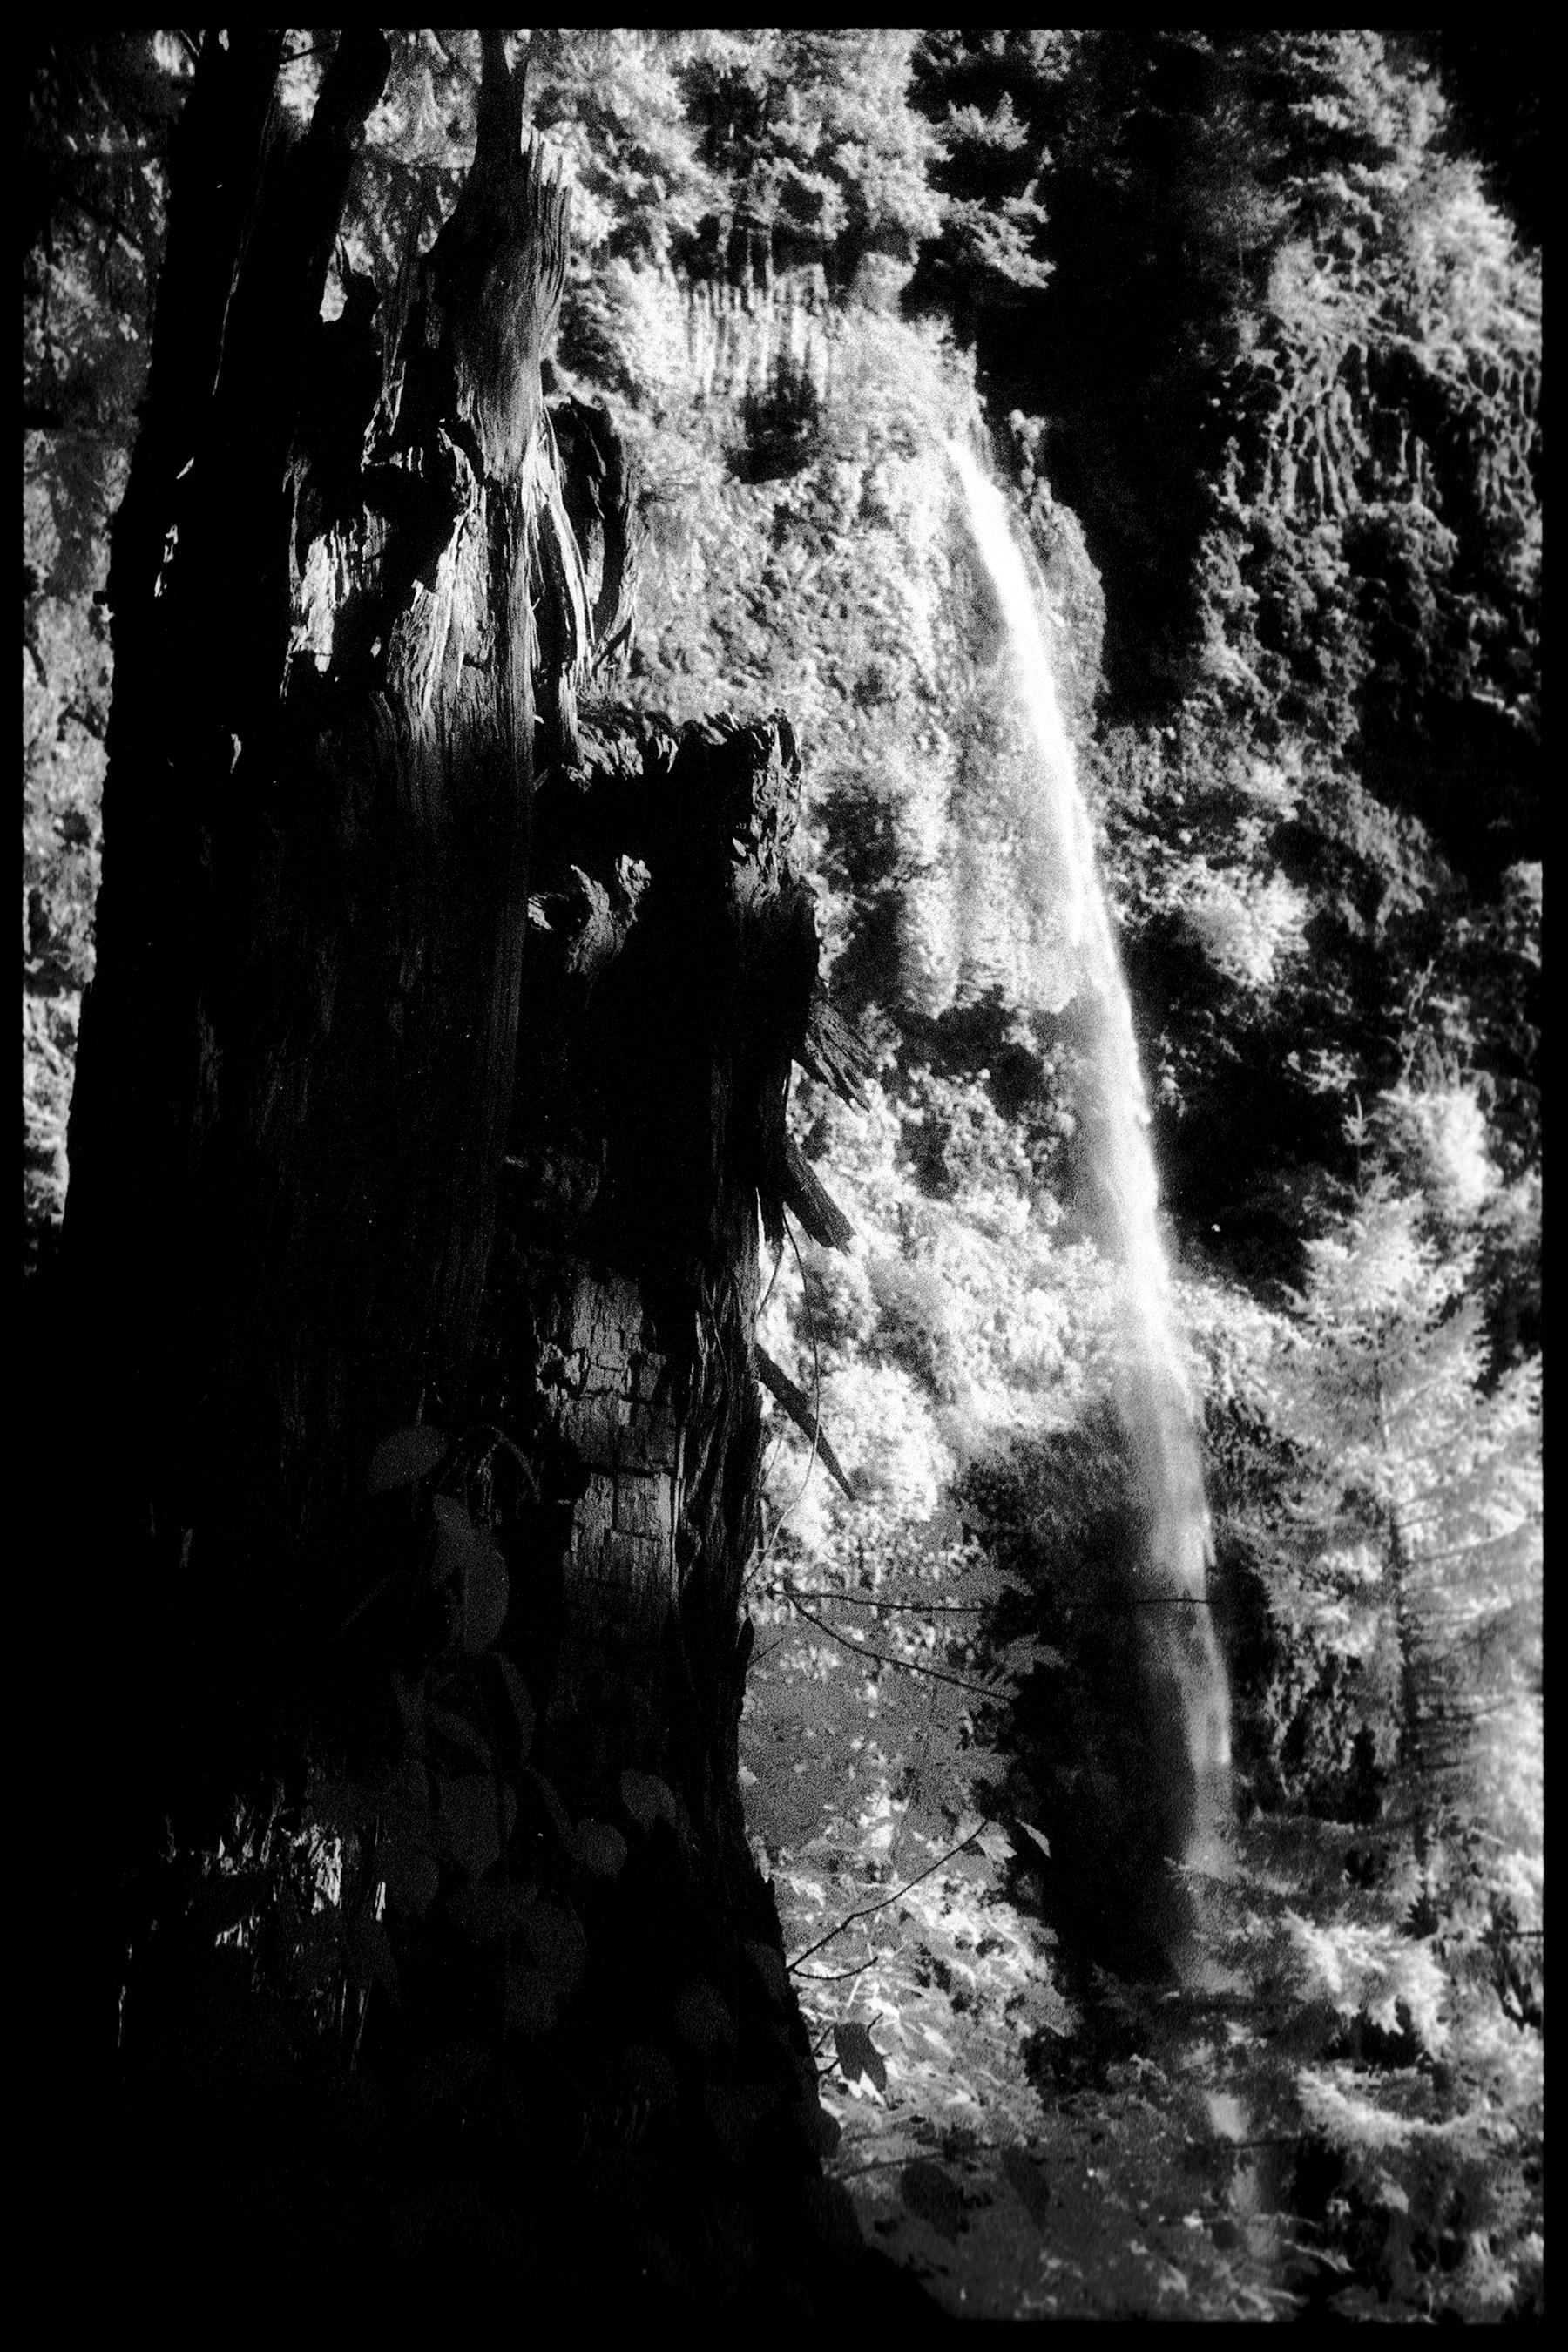 Edward Alfano Landscape Photograph - Multnomah Falls I - Contemporary Photograph of Oregon National Park (Black+White